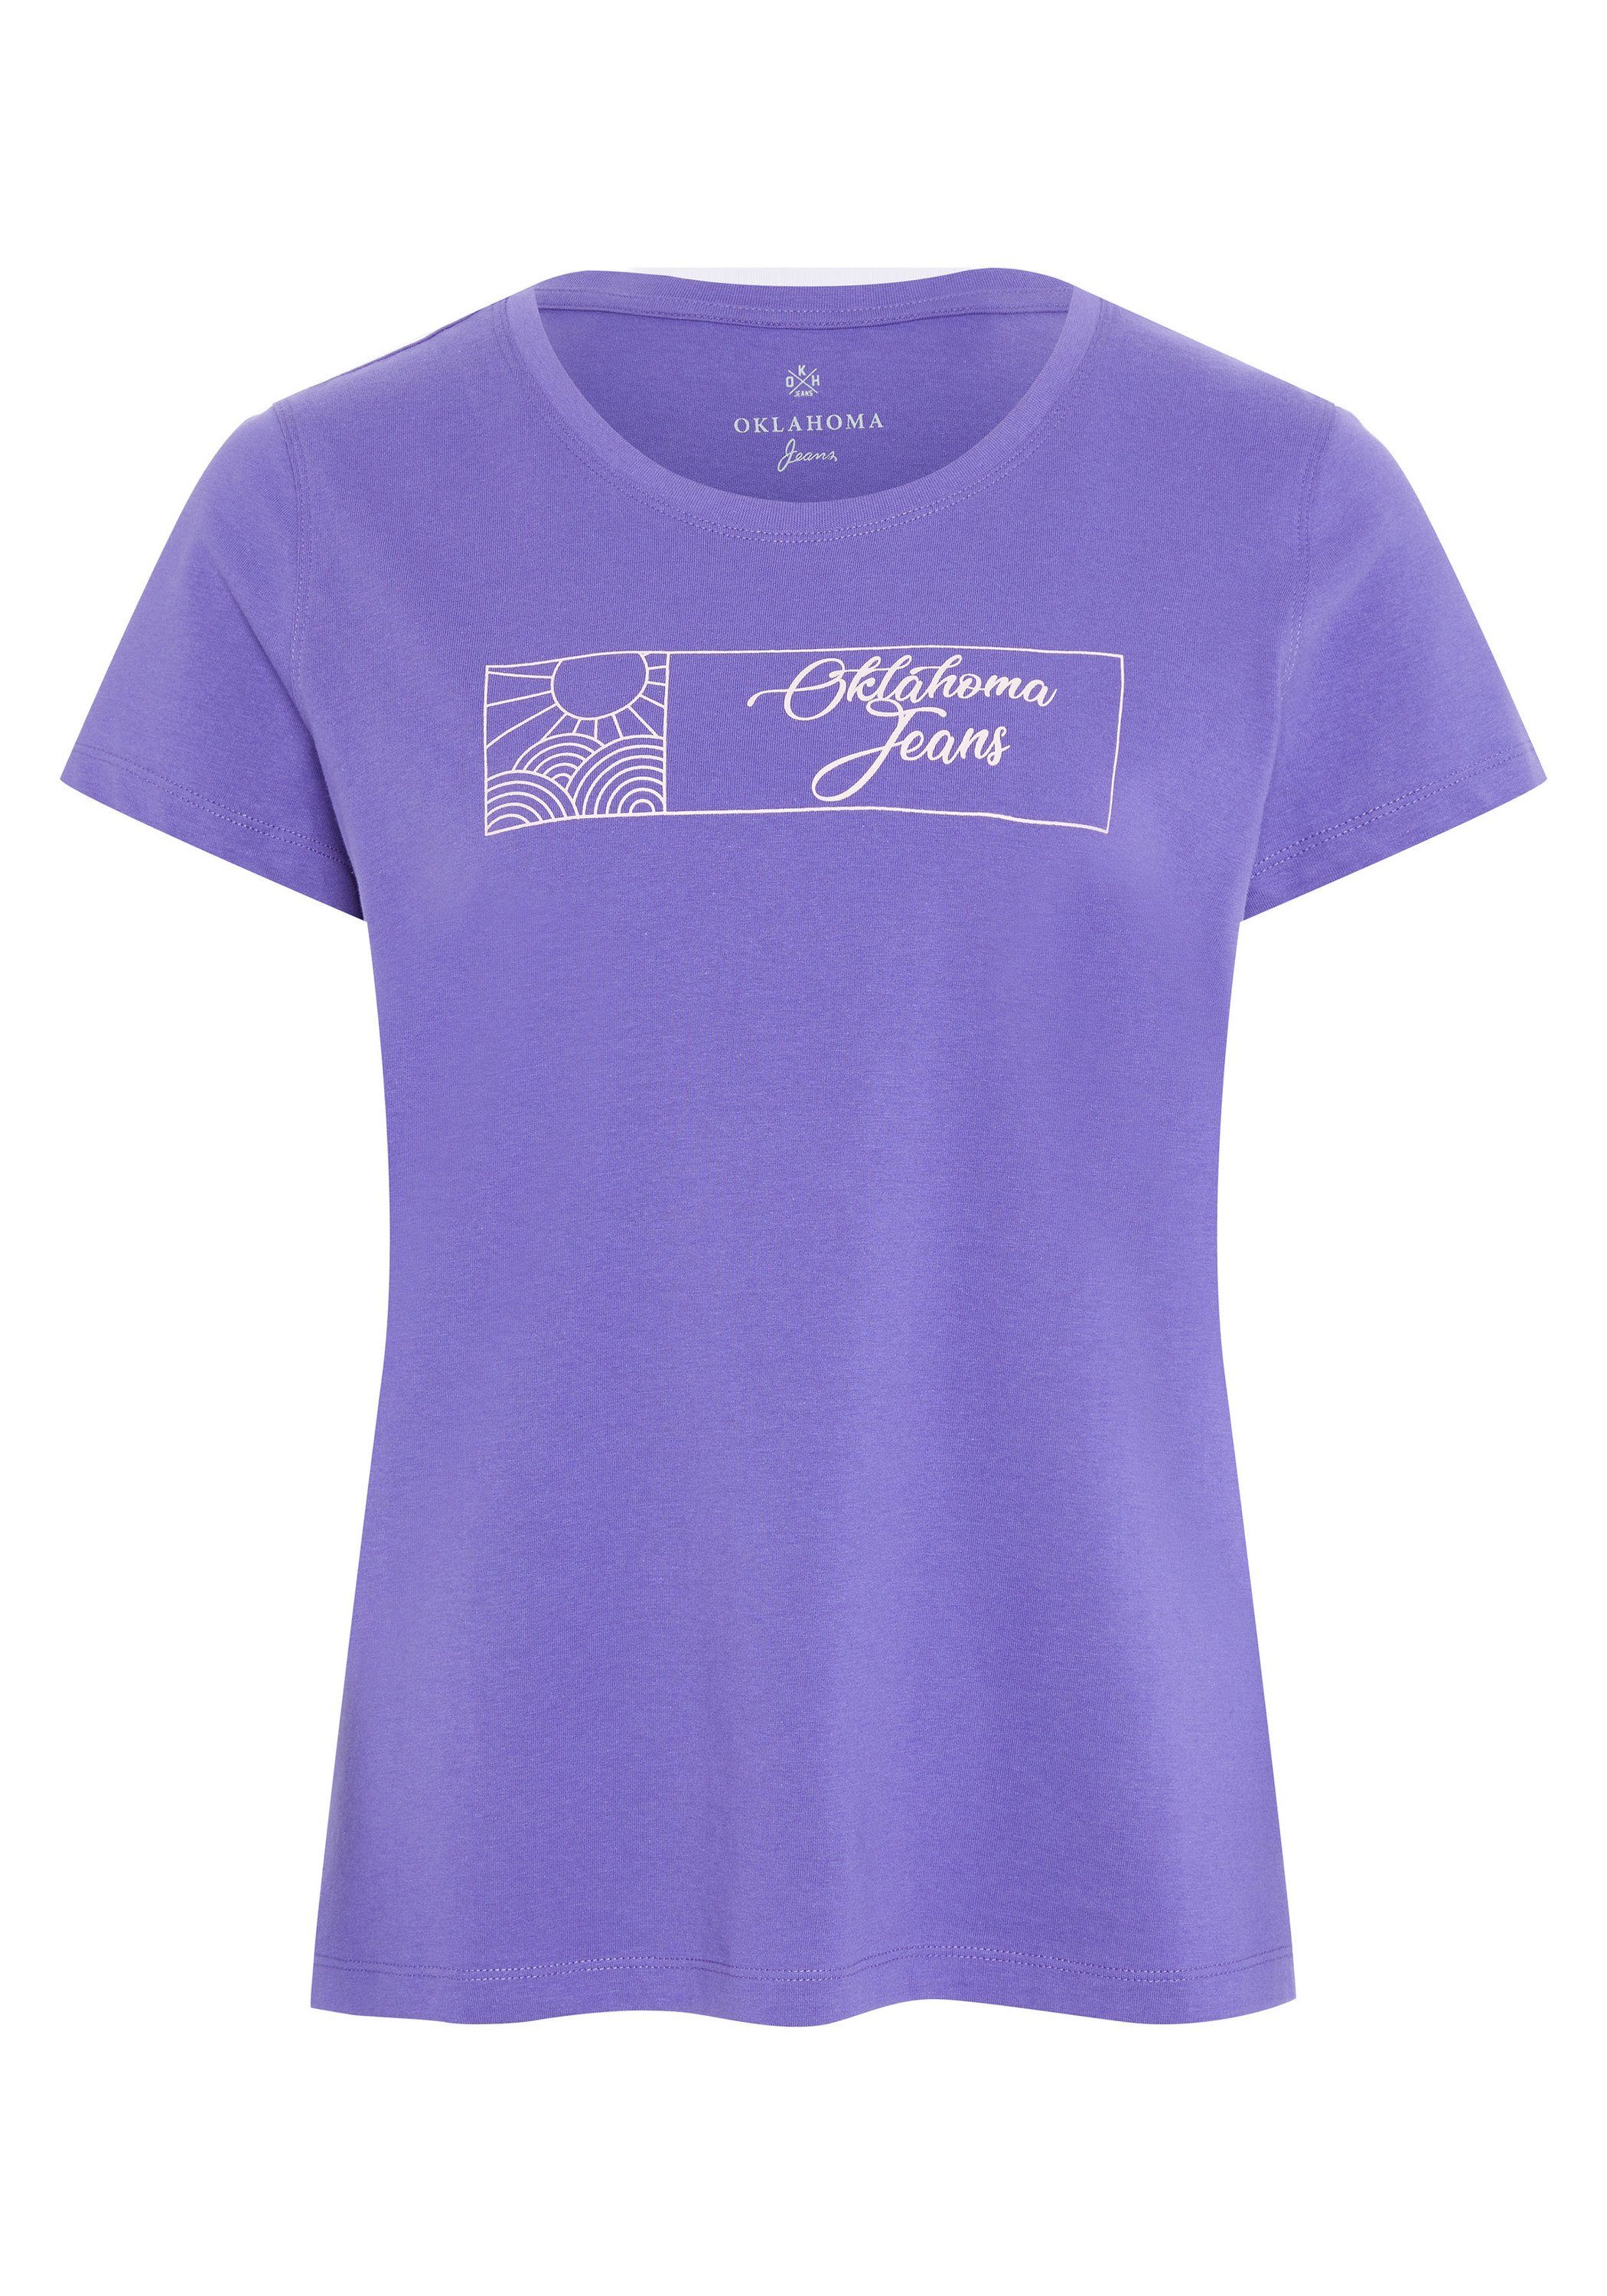 Oklahoma Jeans und Flower Sonnenprint Passion Logo mit Print-Shirt 18-3737